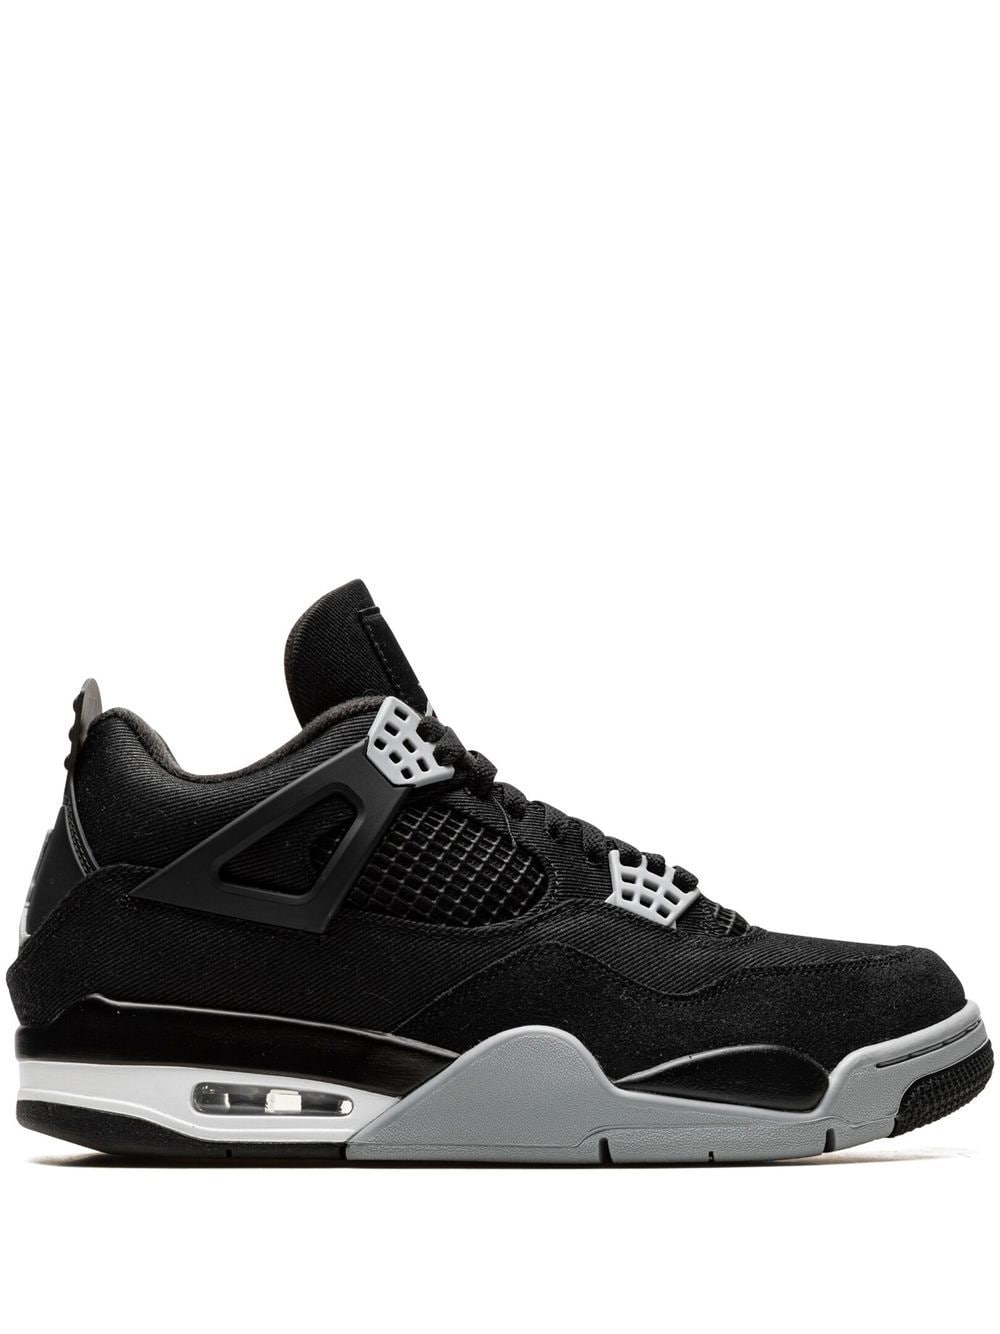 Jordan Air Jordan 4 "Black Canvas" sneakers